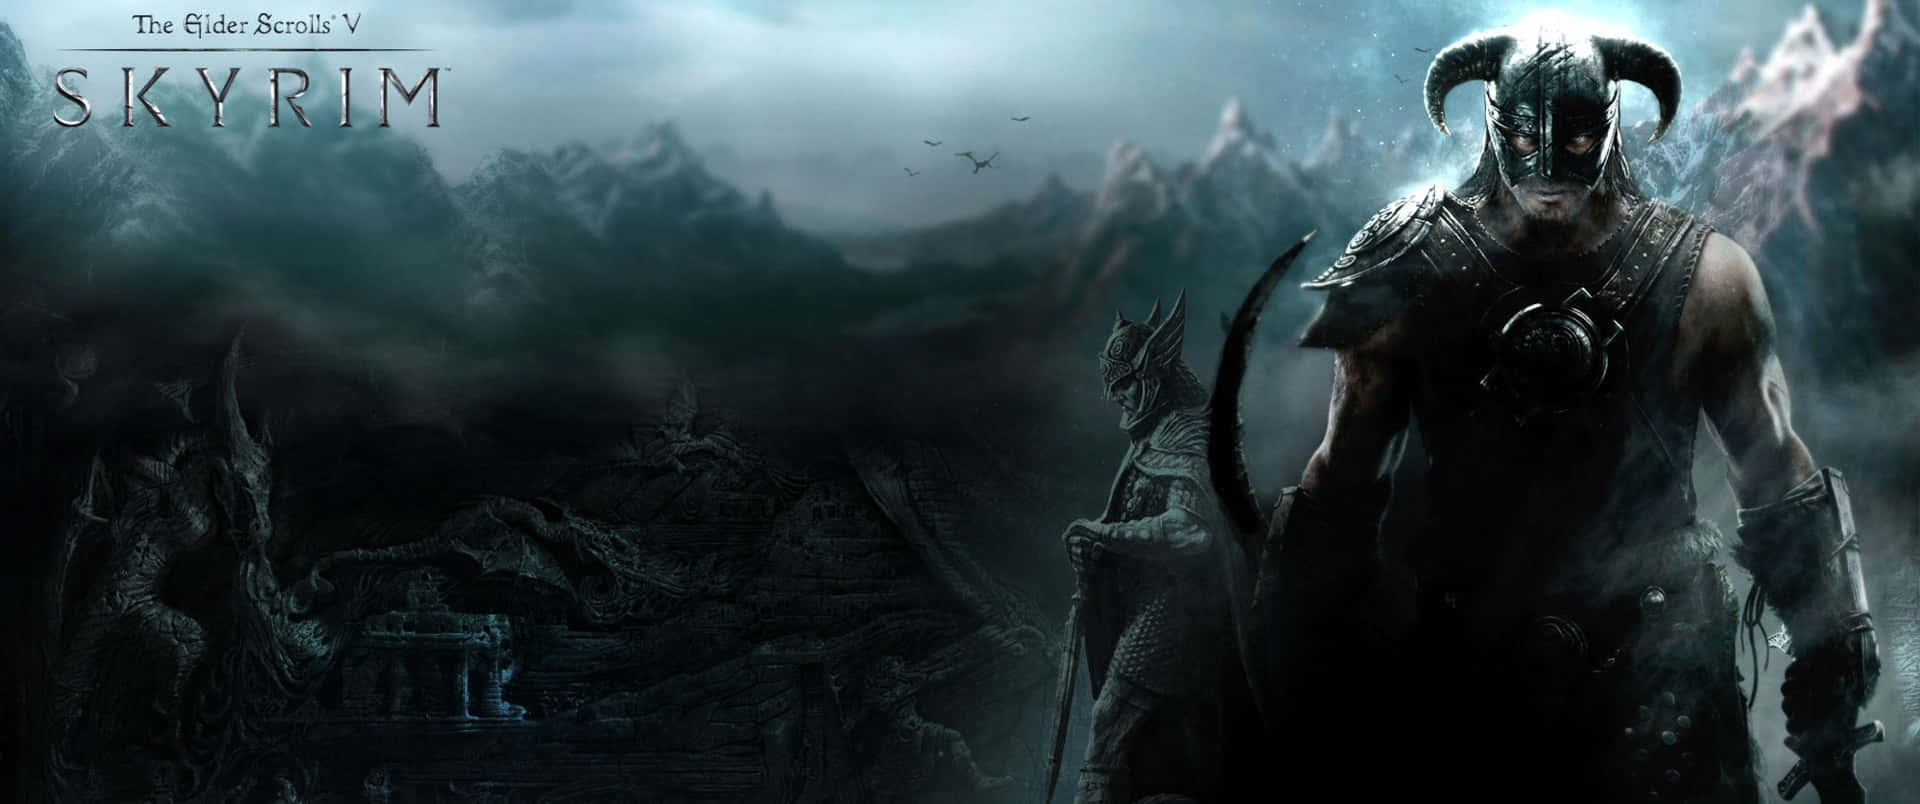 Enjoy an Amazing Adventure in The Elder Scrolls V Skyrim